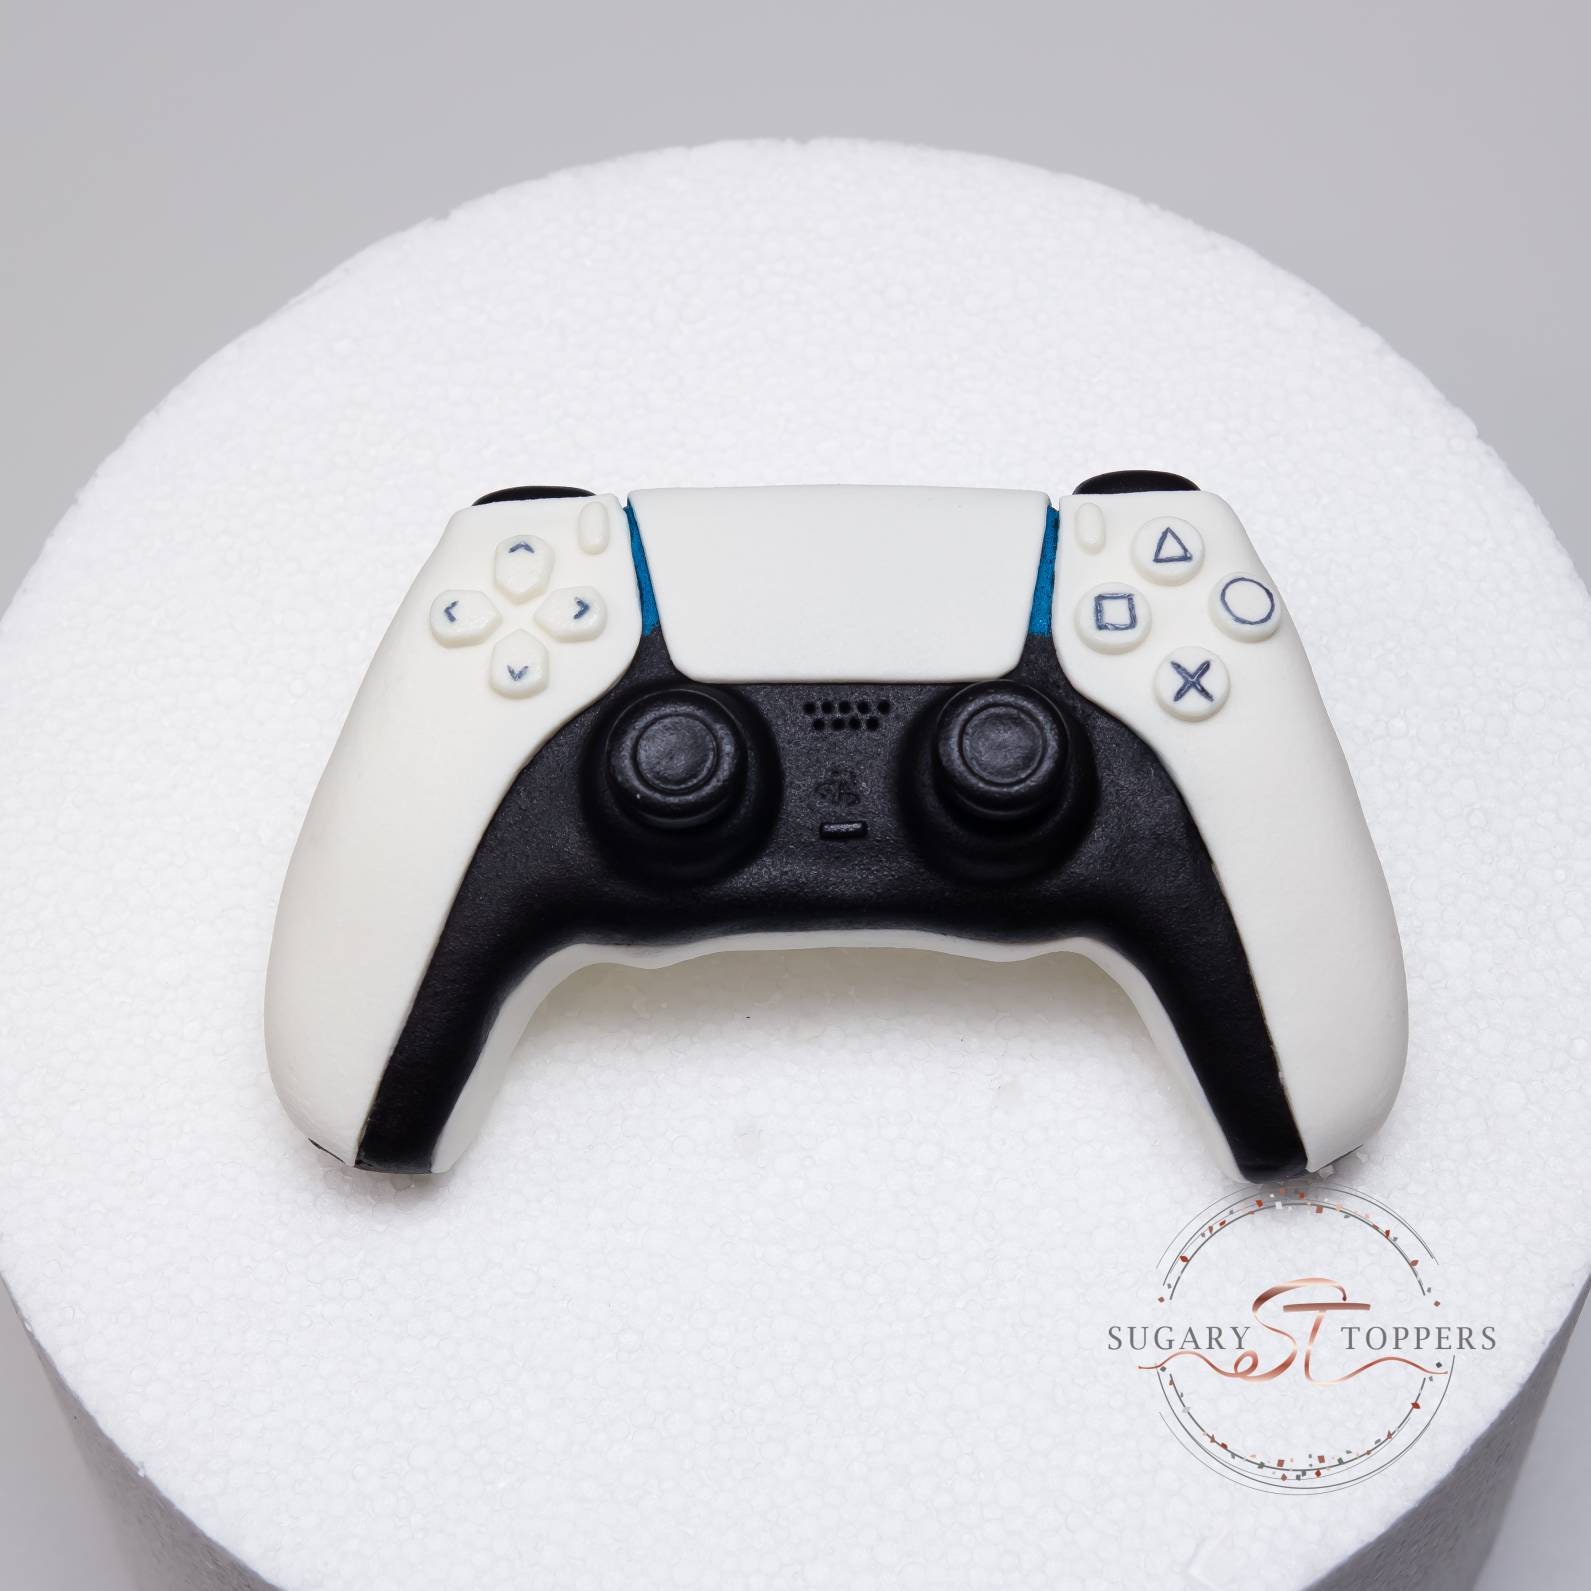 Bolo jogo  Video game cakes, Boy birthday cake, Playstation cake